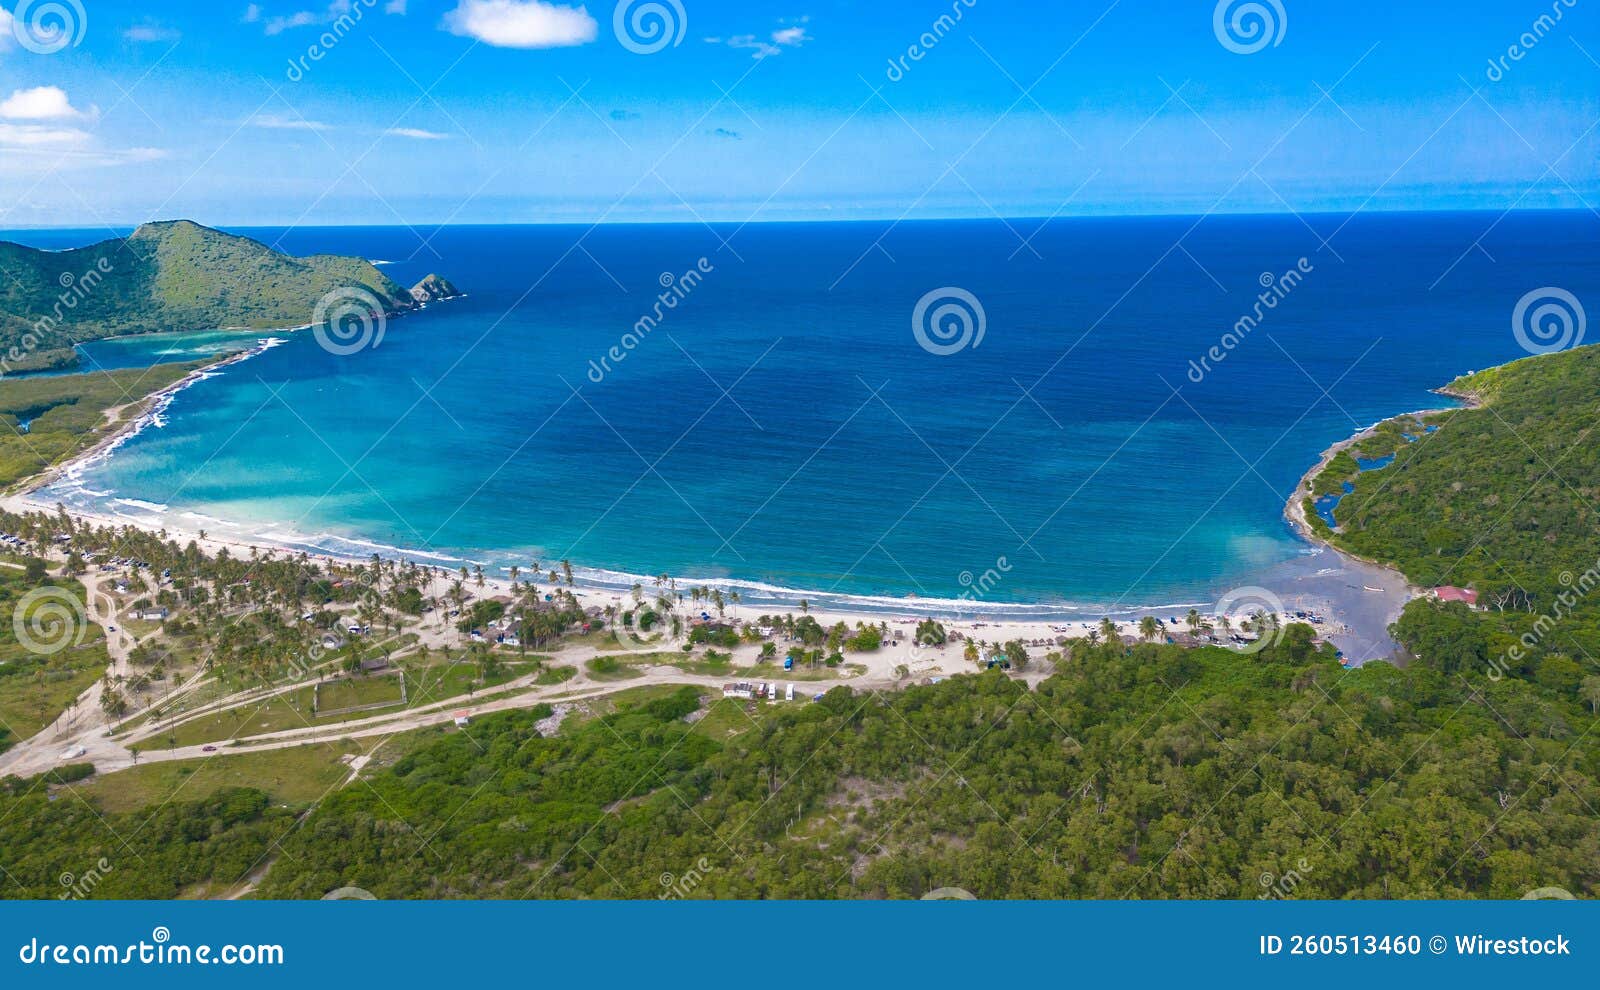 aerial view of the beautiful sunny bahia de patanemo beach in puerto cabello, venezuela